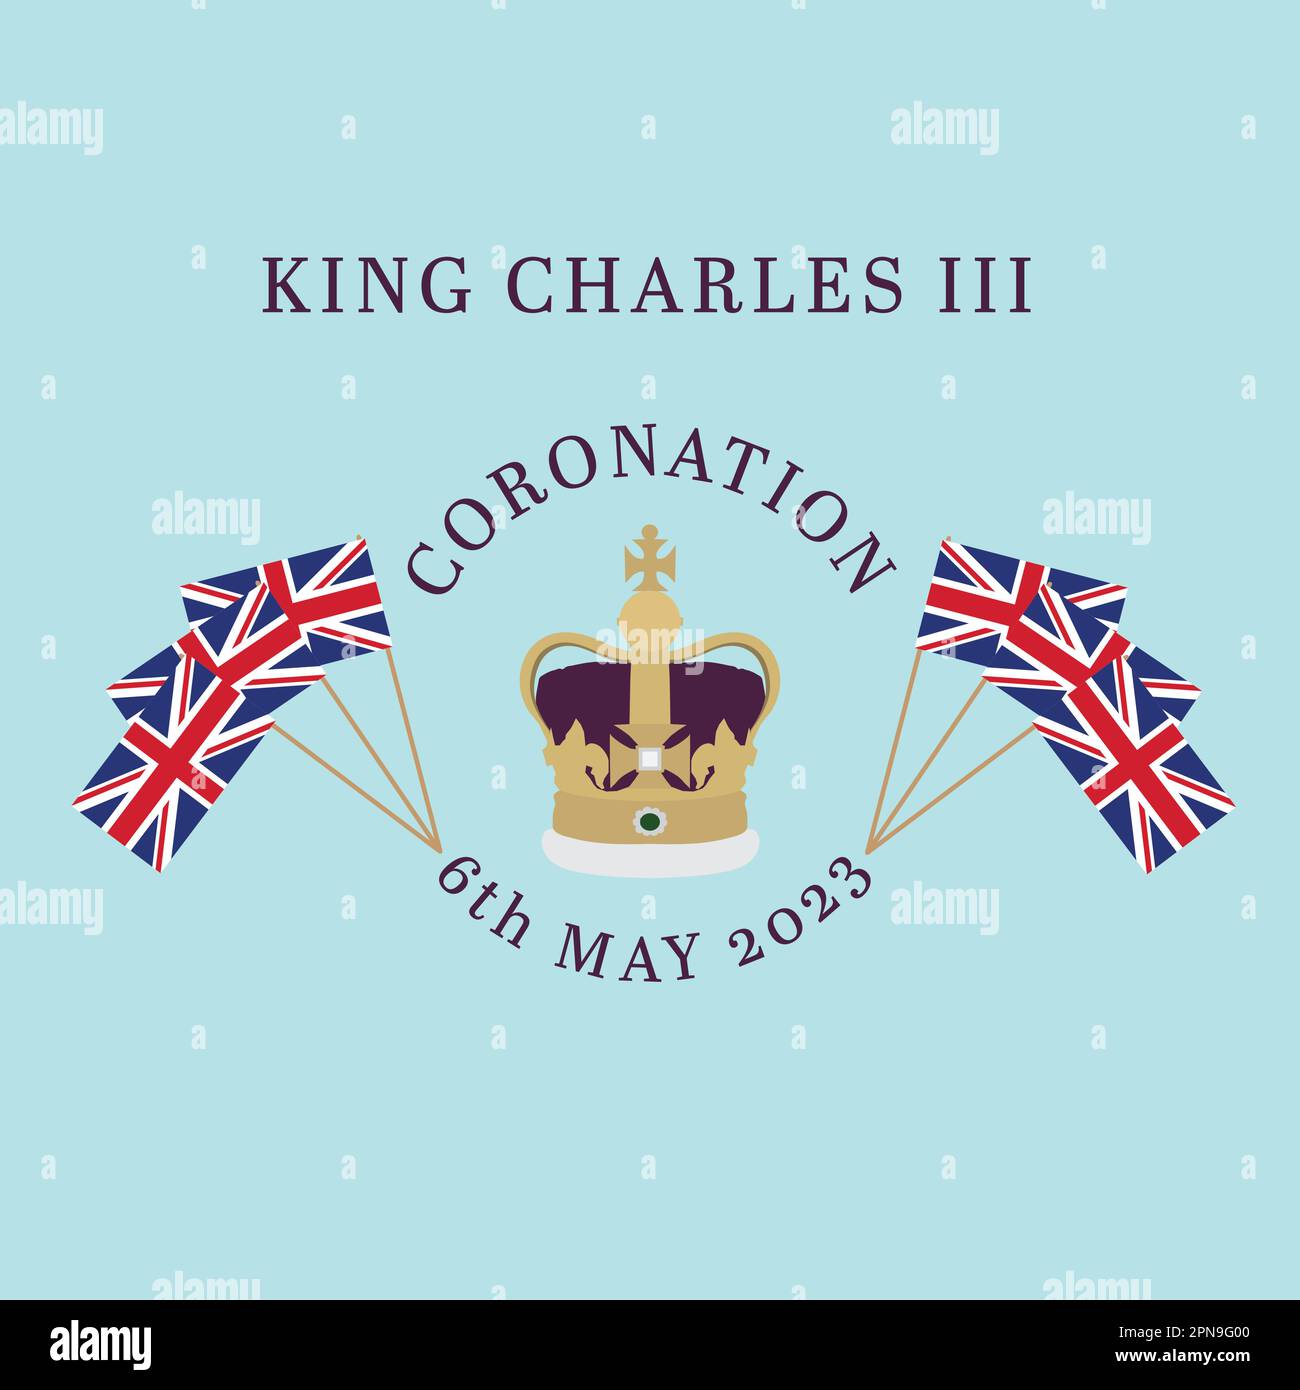 King Charles III Coronation 6th May 2023 vector illustration Stock Vector